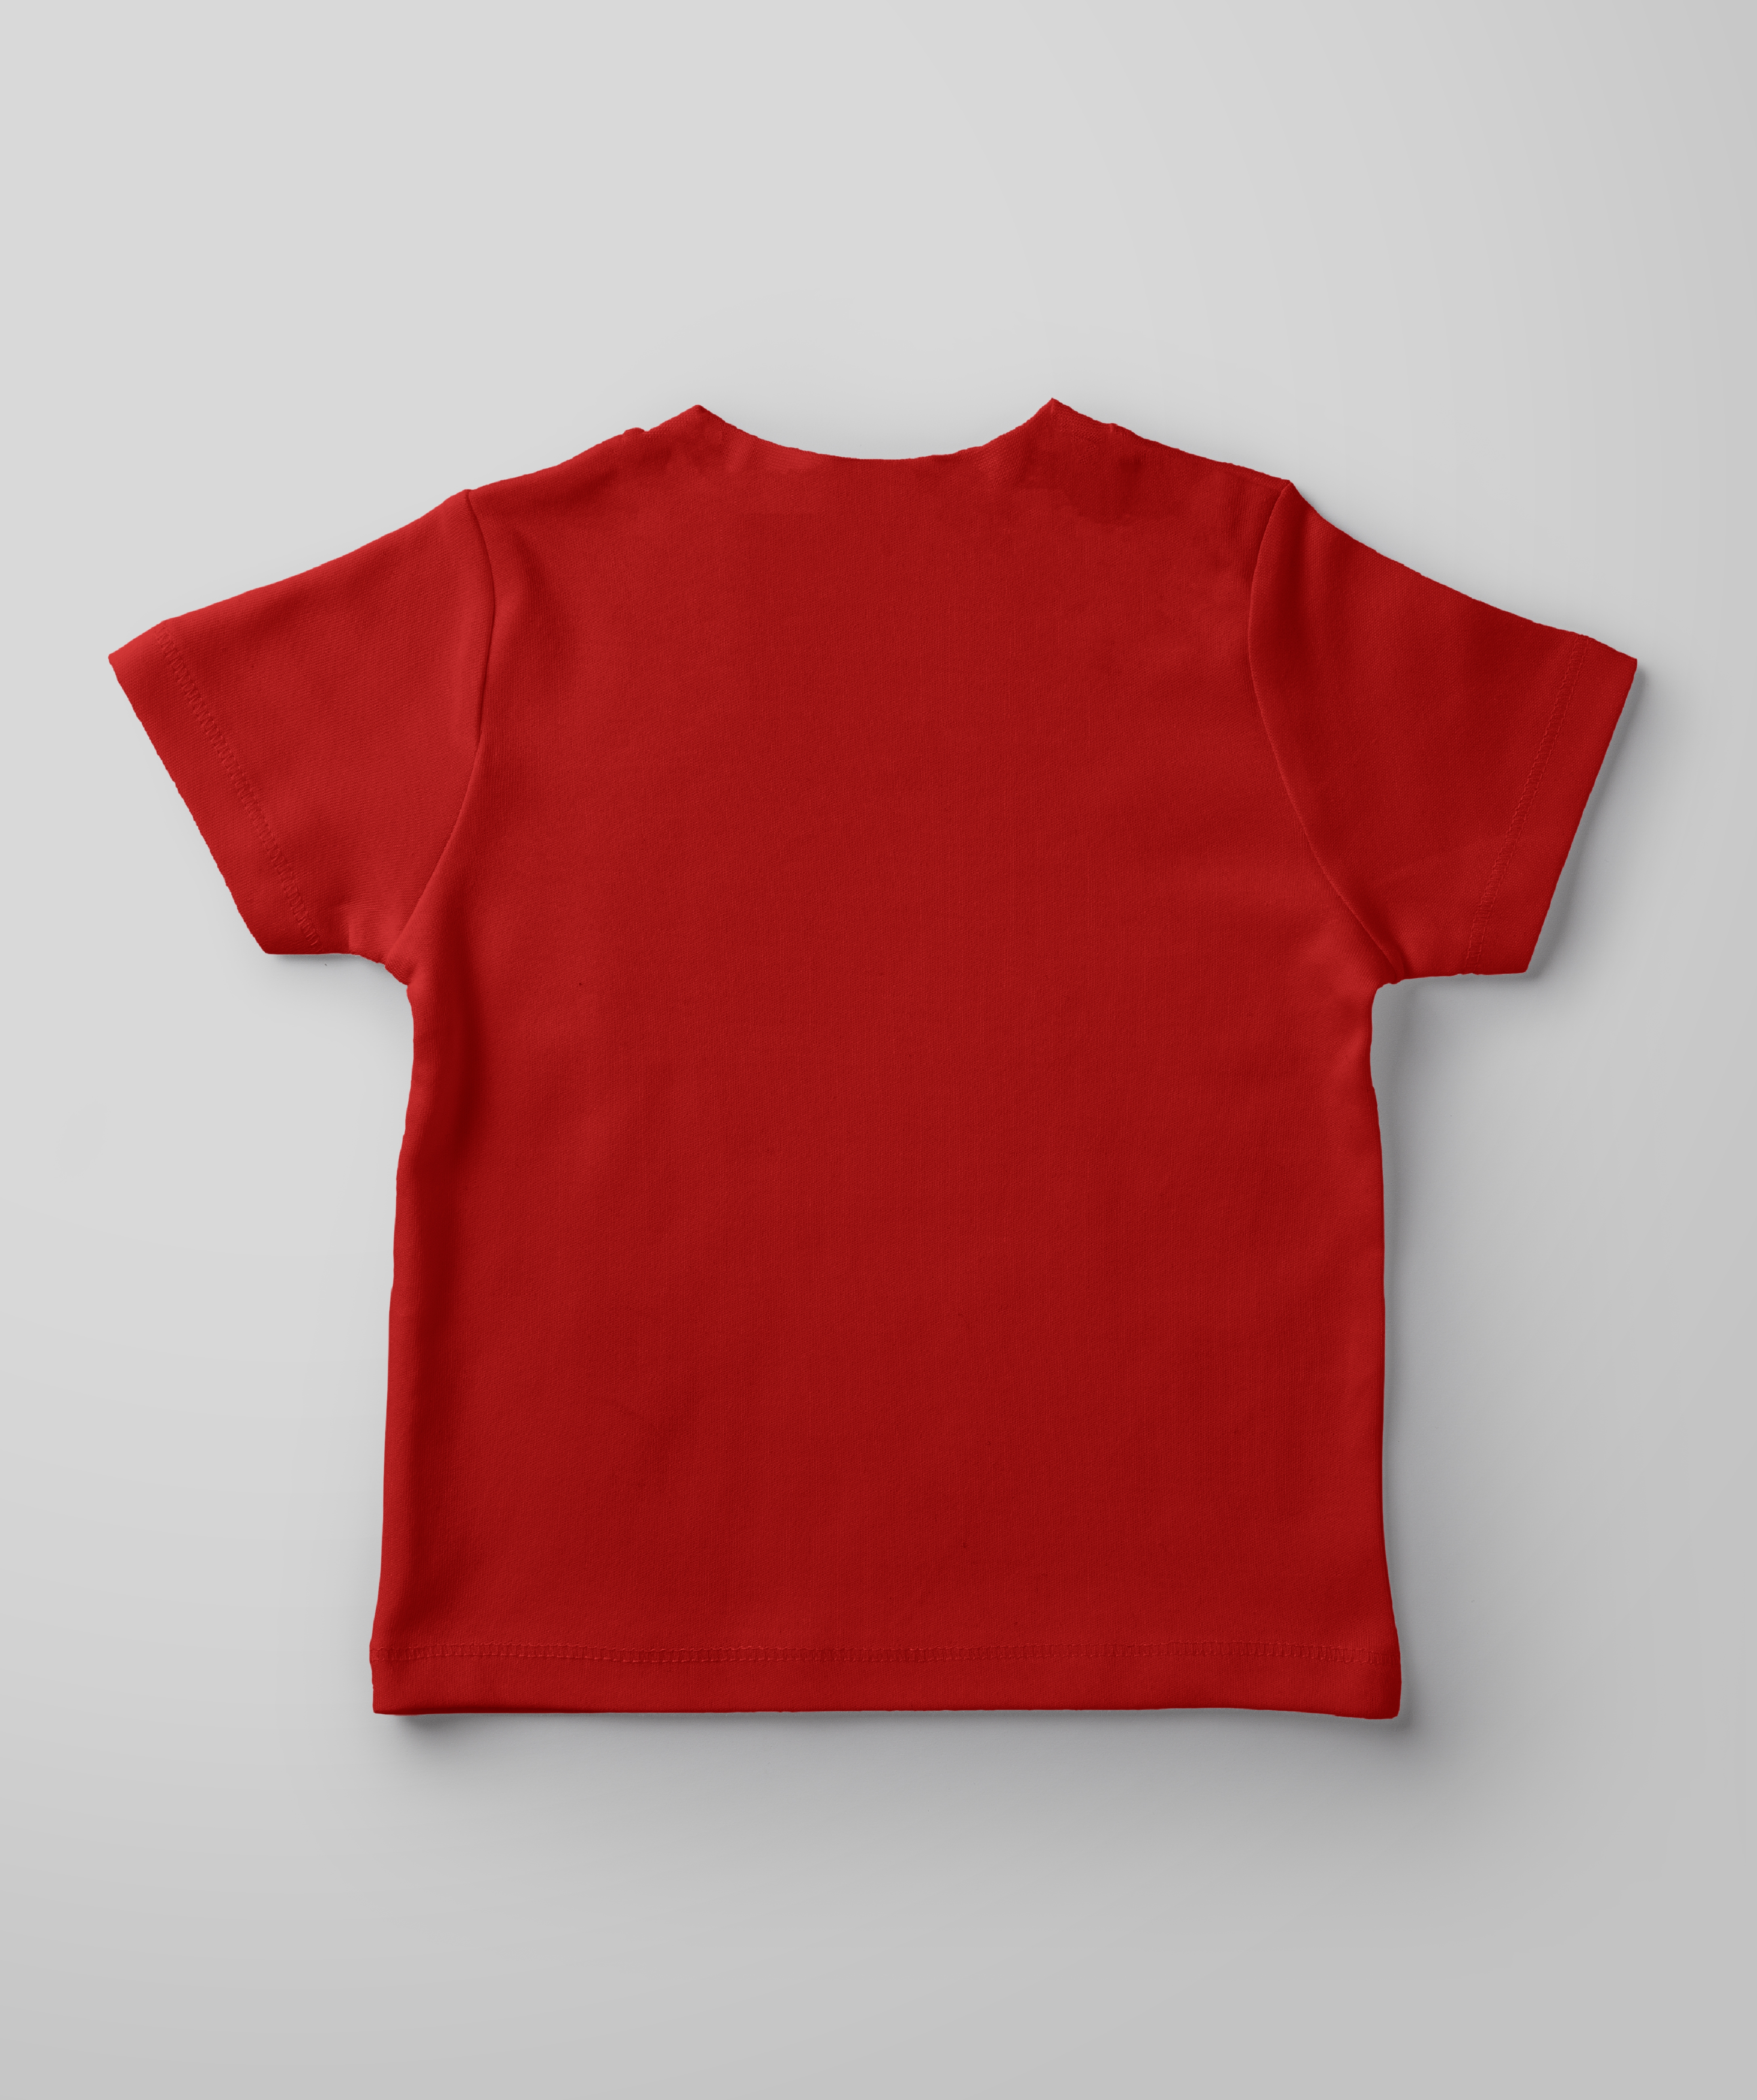 UrGear | UrGear Kids Red Hand Printed Cotton T-Shirt 1